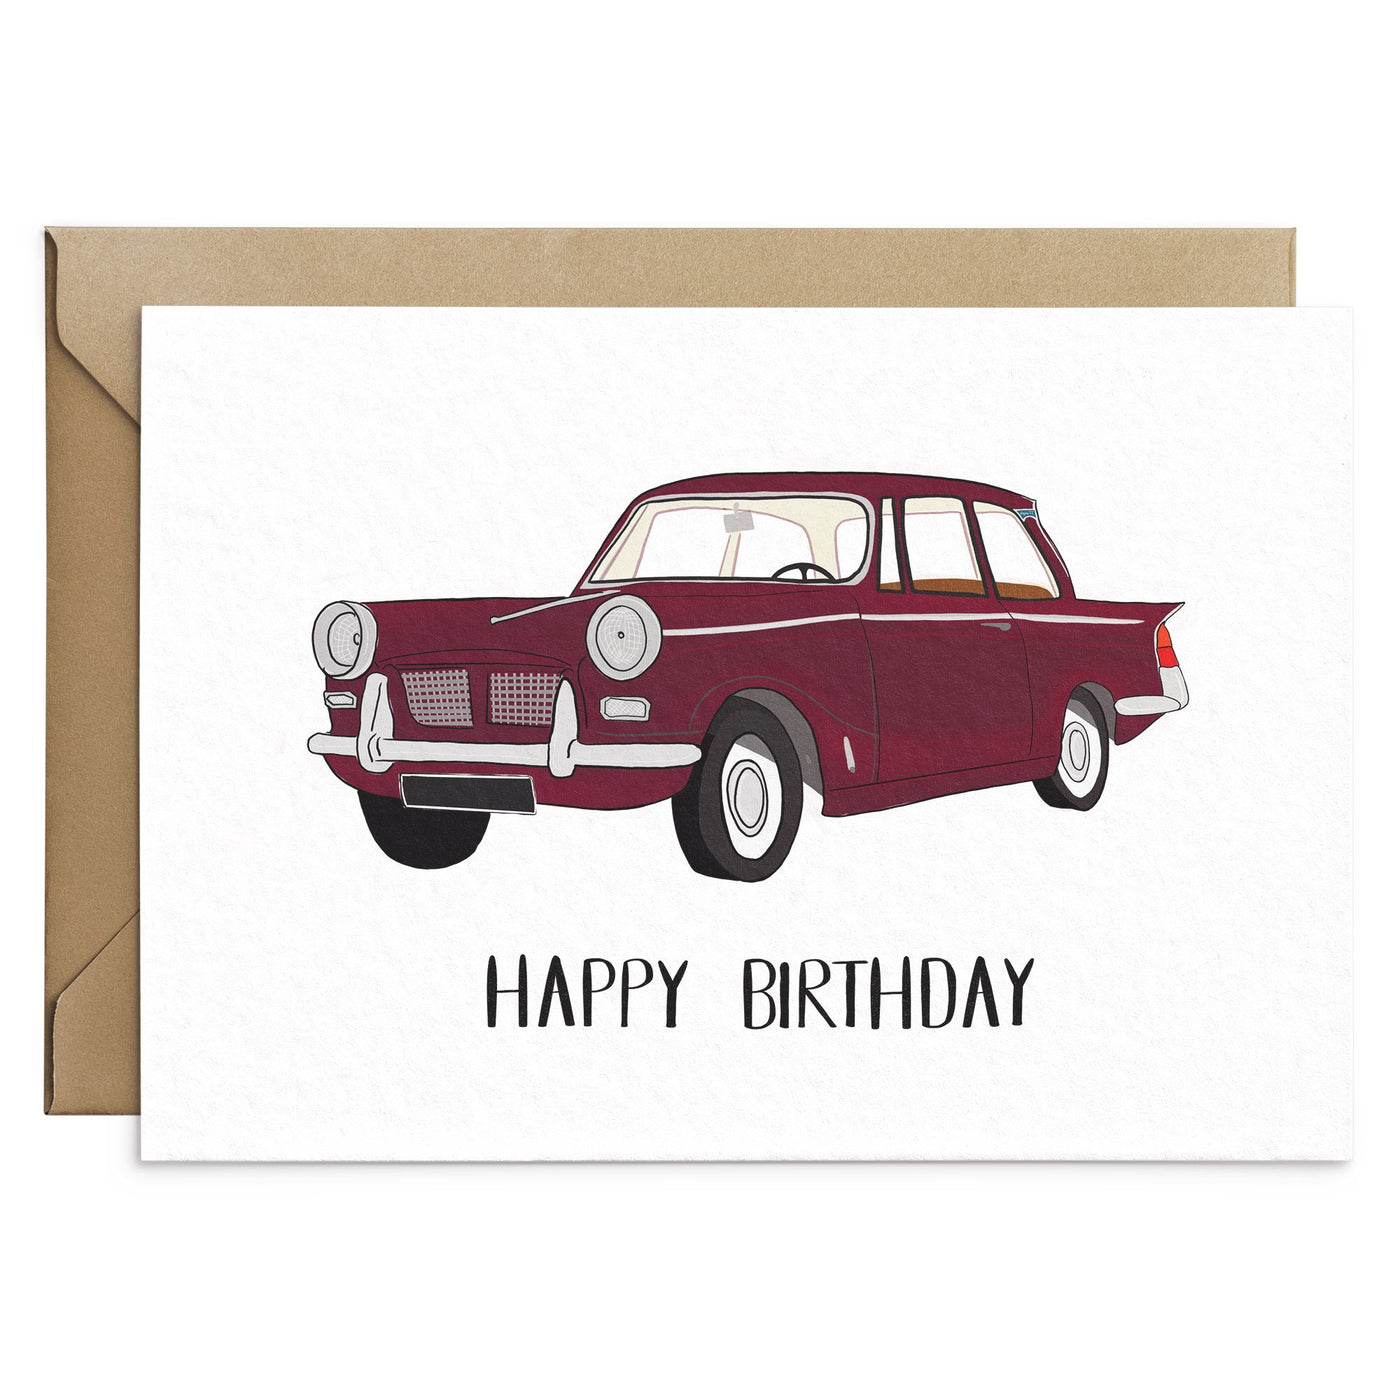 Vintage Car Birthday Card - Poppins & Co.